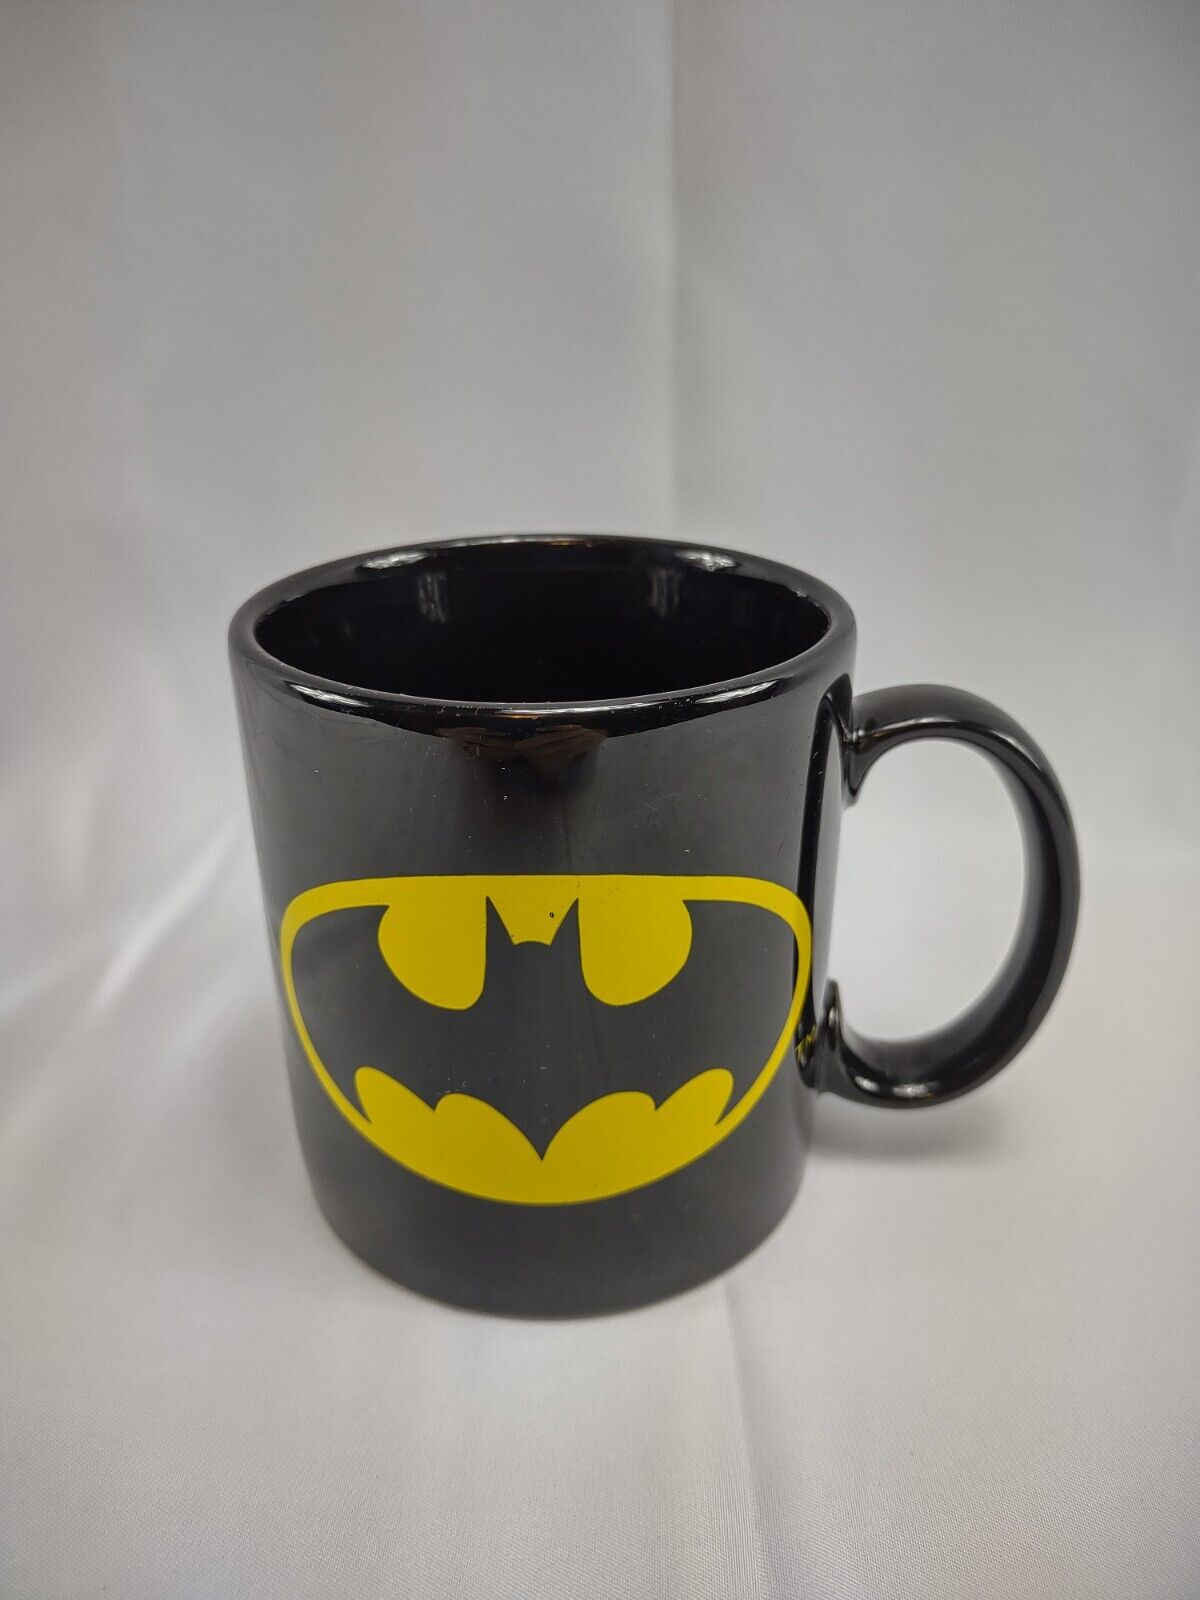 Vintage 1989 Batman Collector Mug by Applause No Chips 